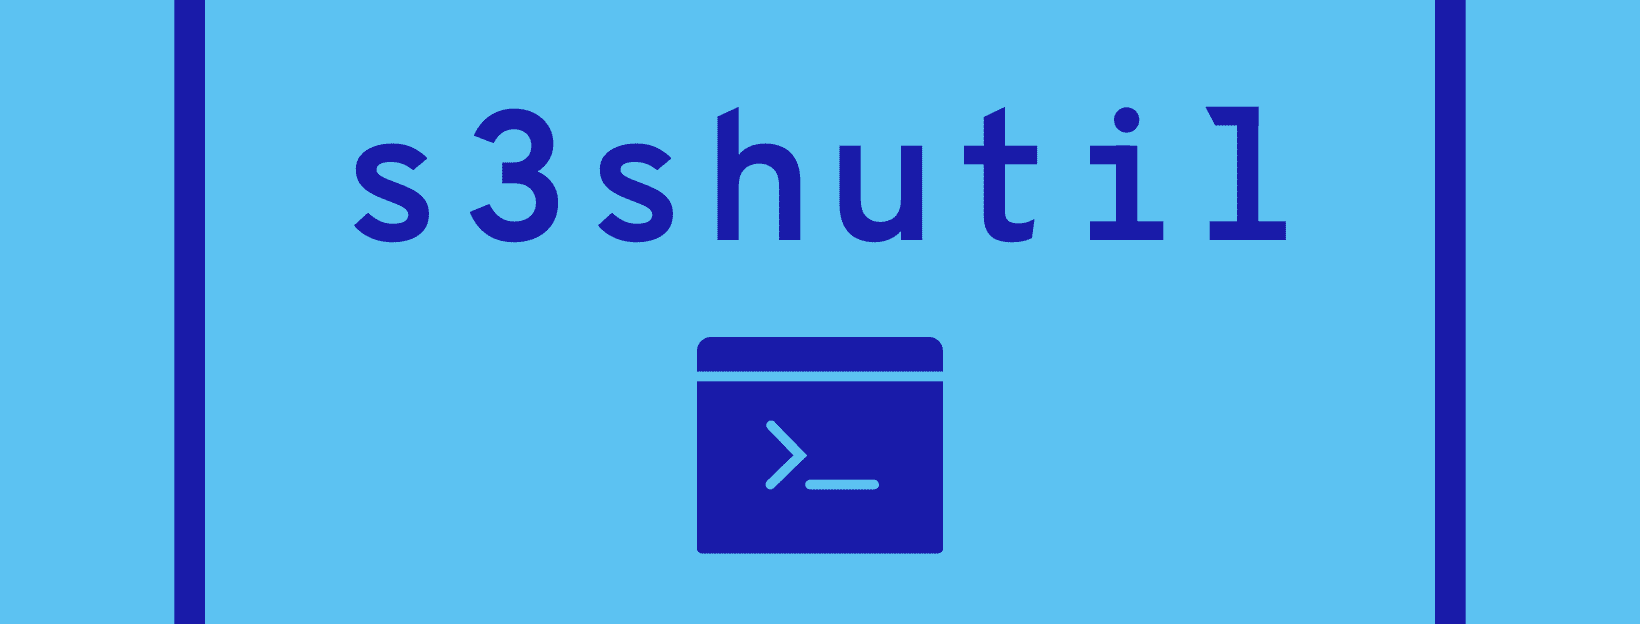 s3shutil-logo.png